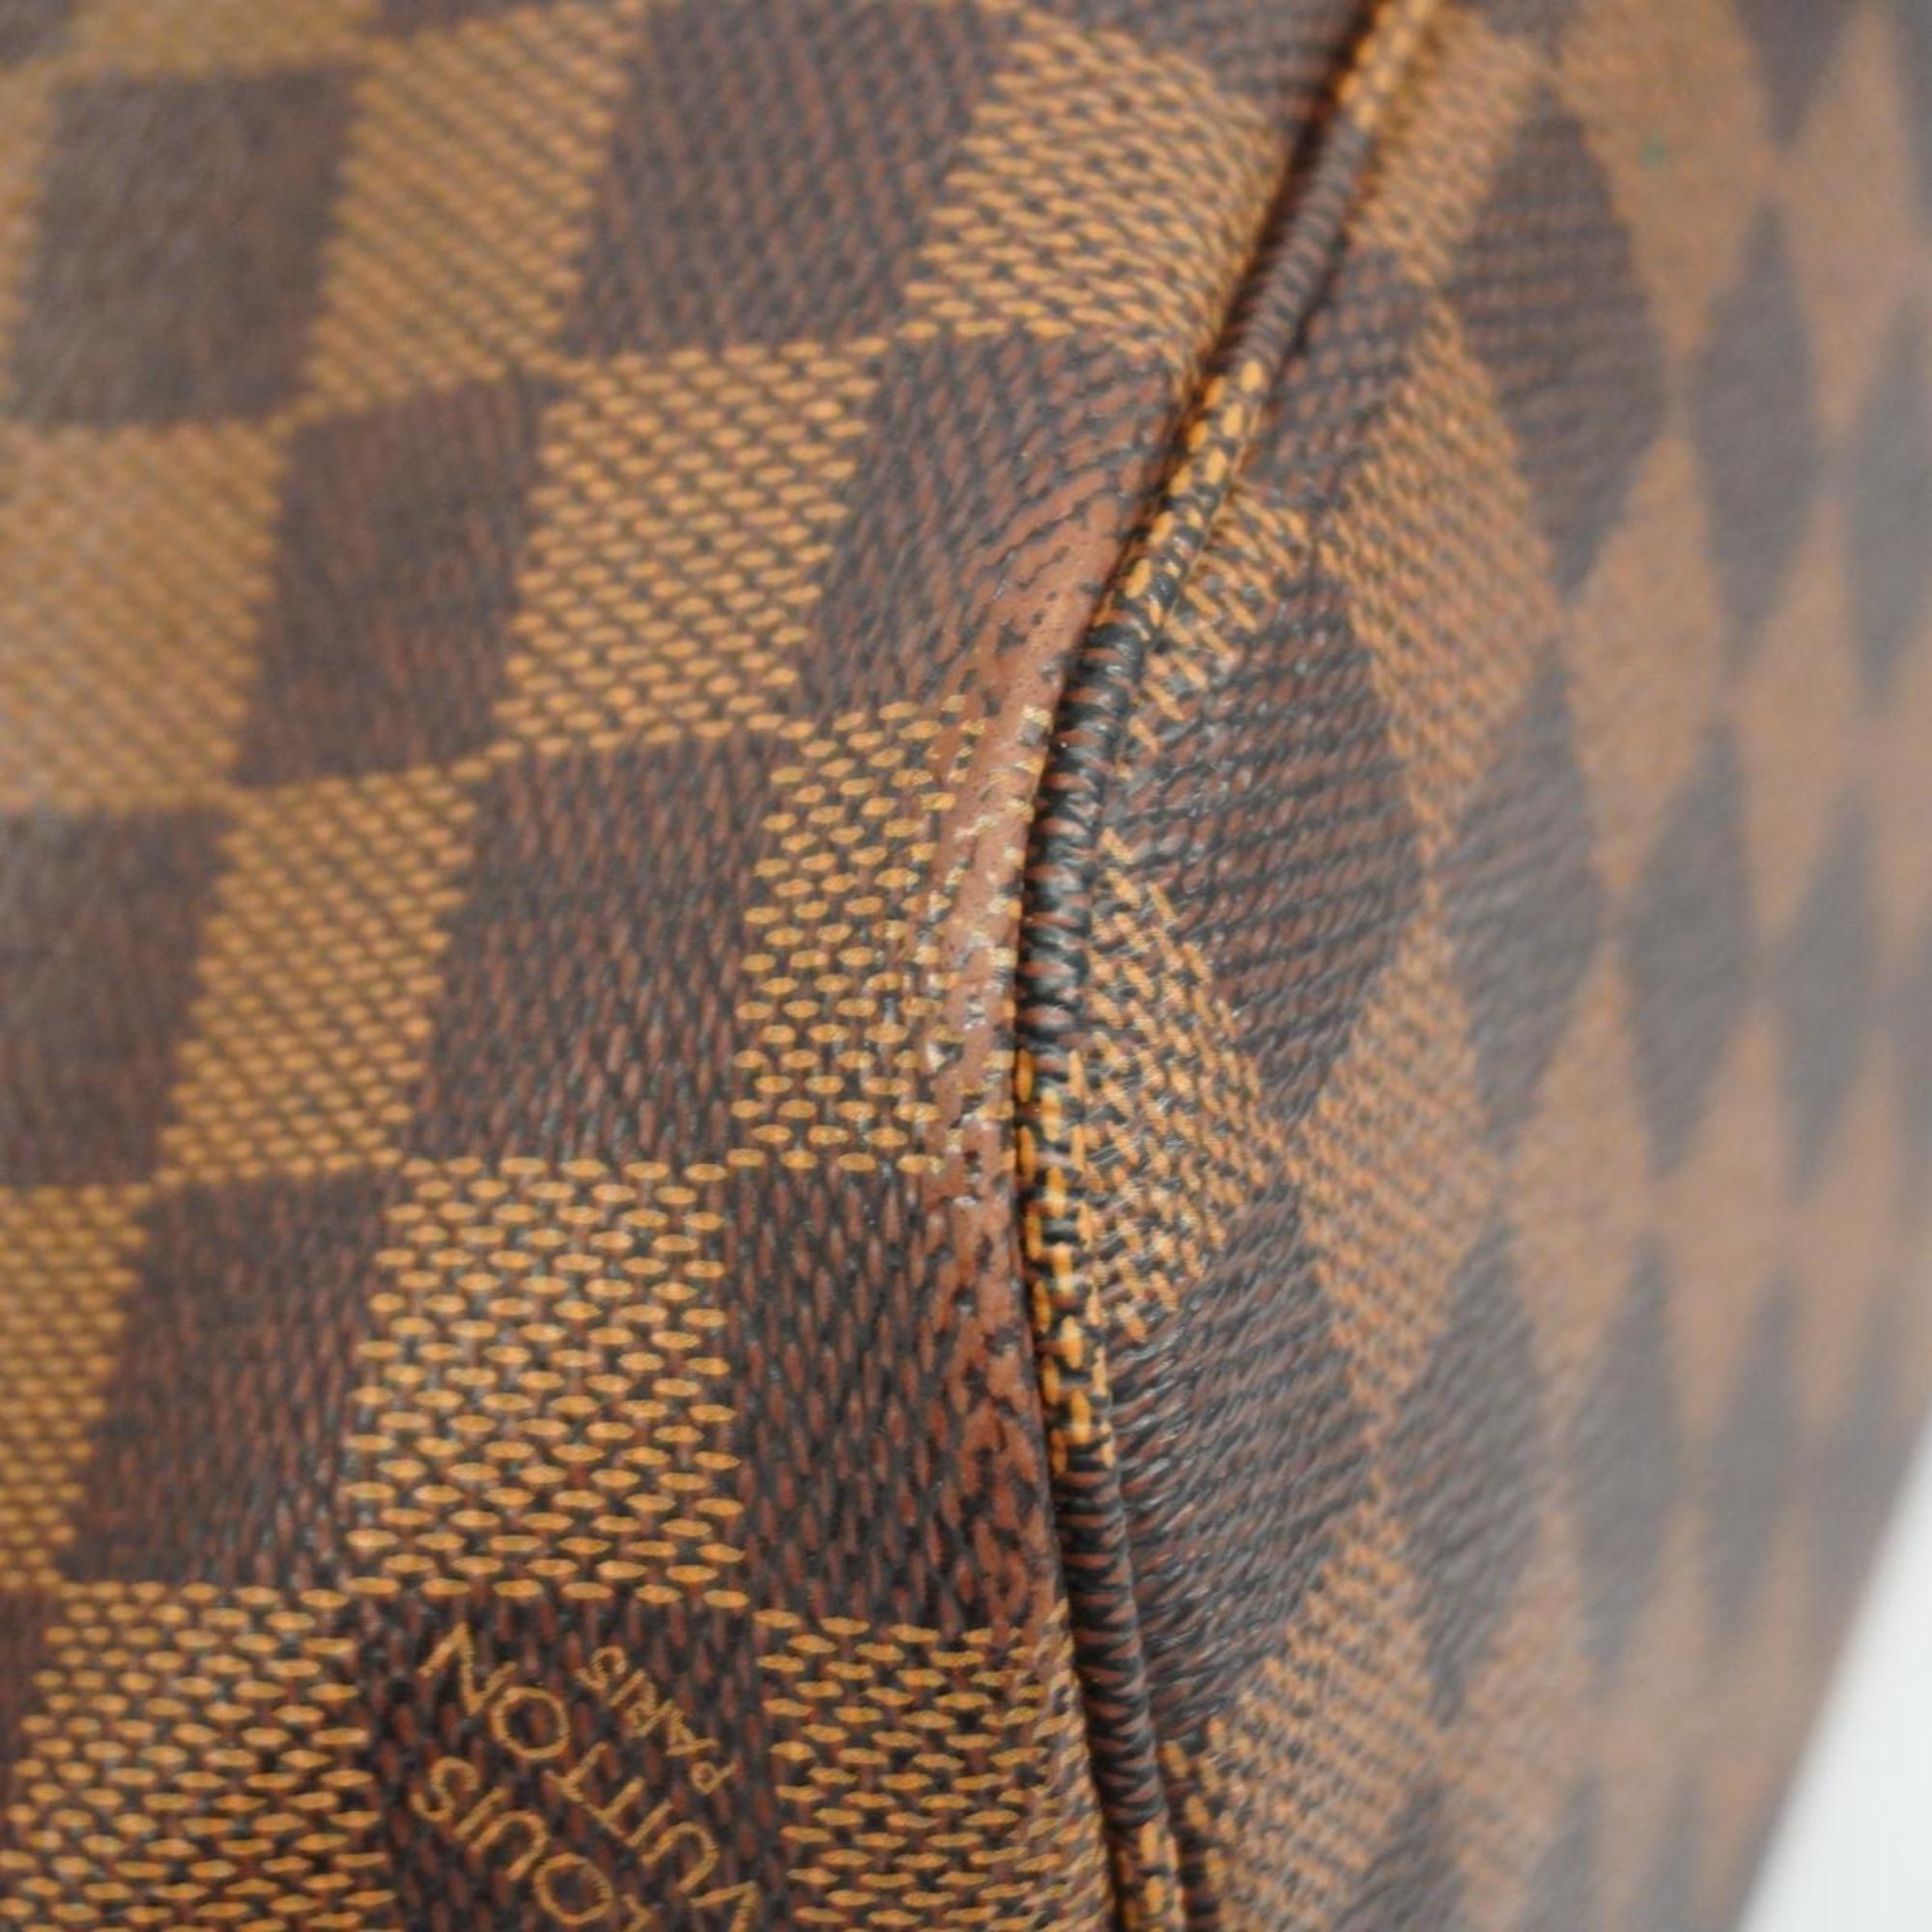 Louis Vuitton Tote Bag Damier Neverfull PM N40600 Ebene Women's